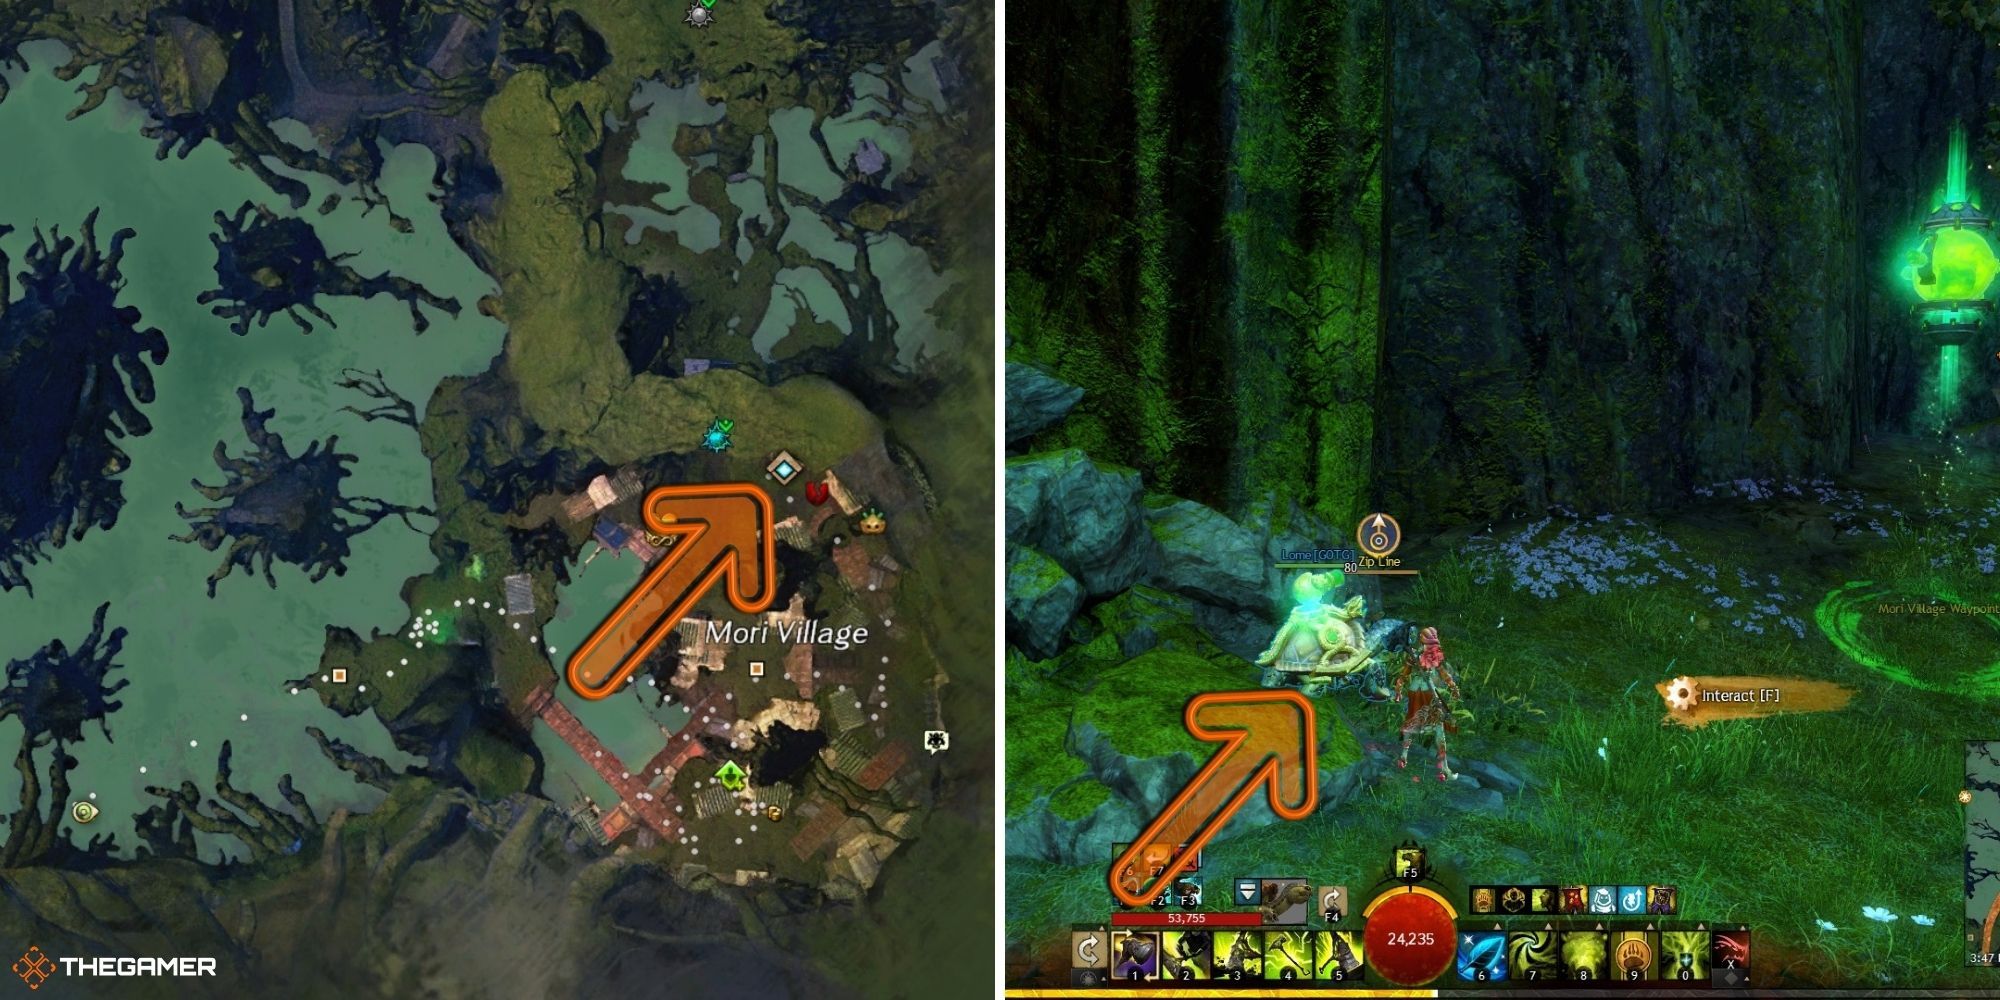 Guild Wars 2 end of dragons - Mori Village map on left, zipline on right